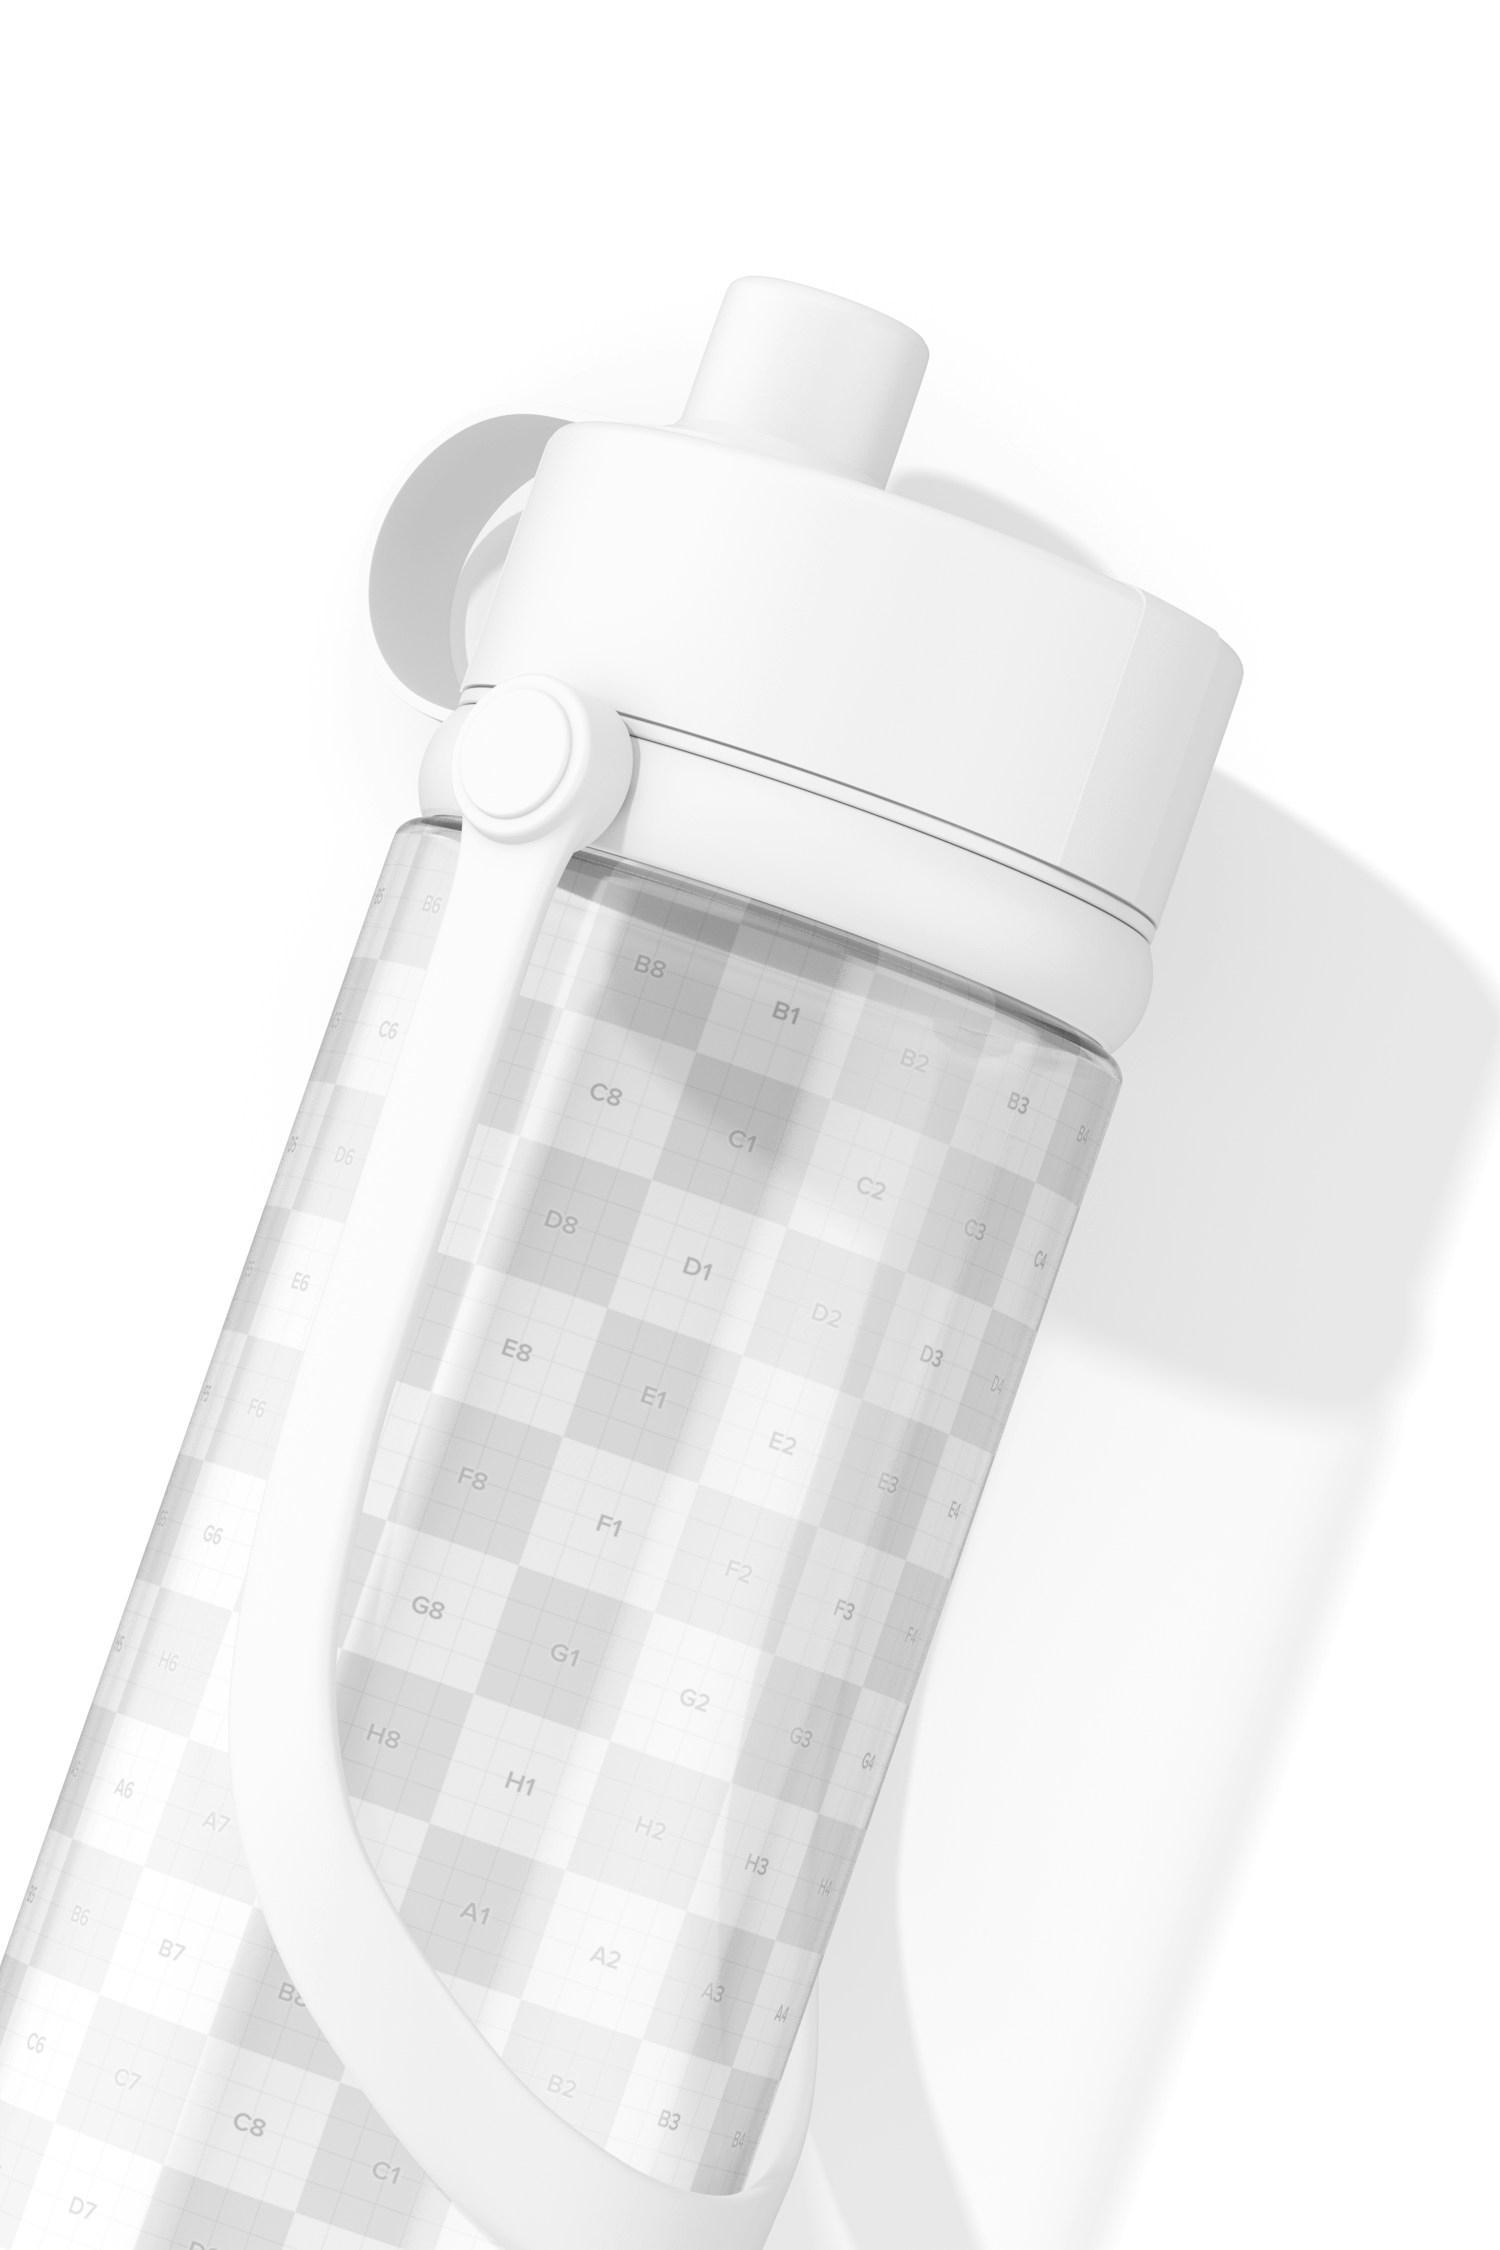 1.5 l Water Bottle Mockup, Close Up